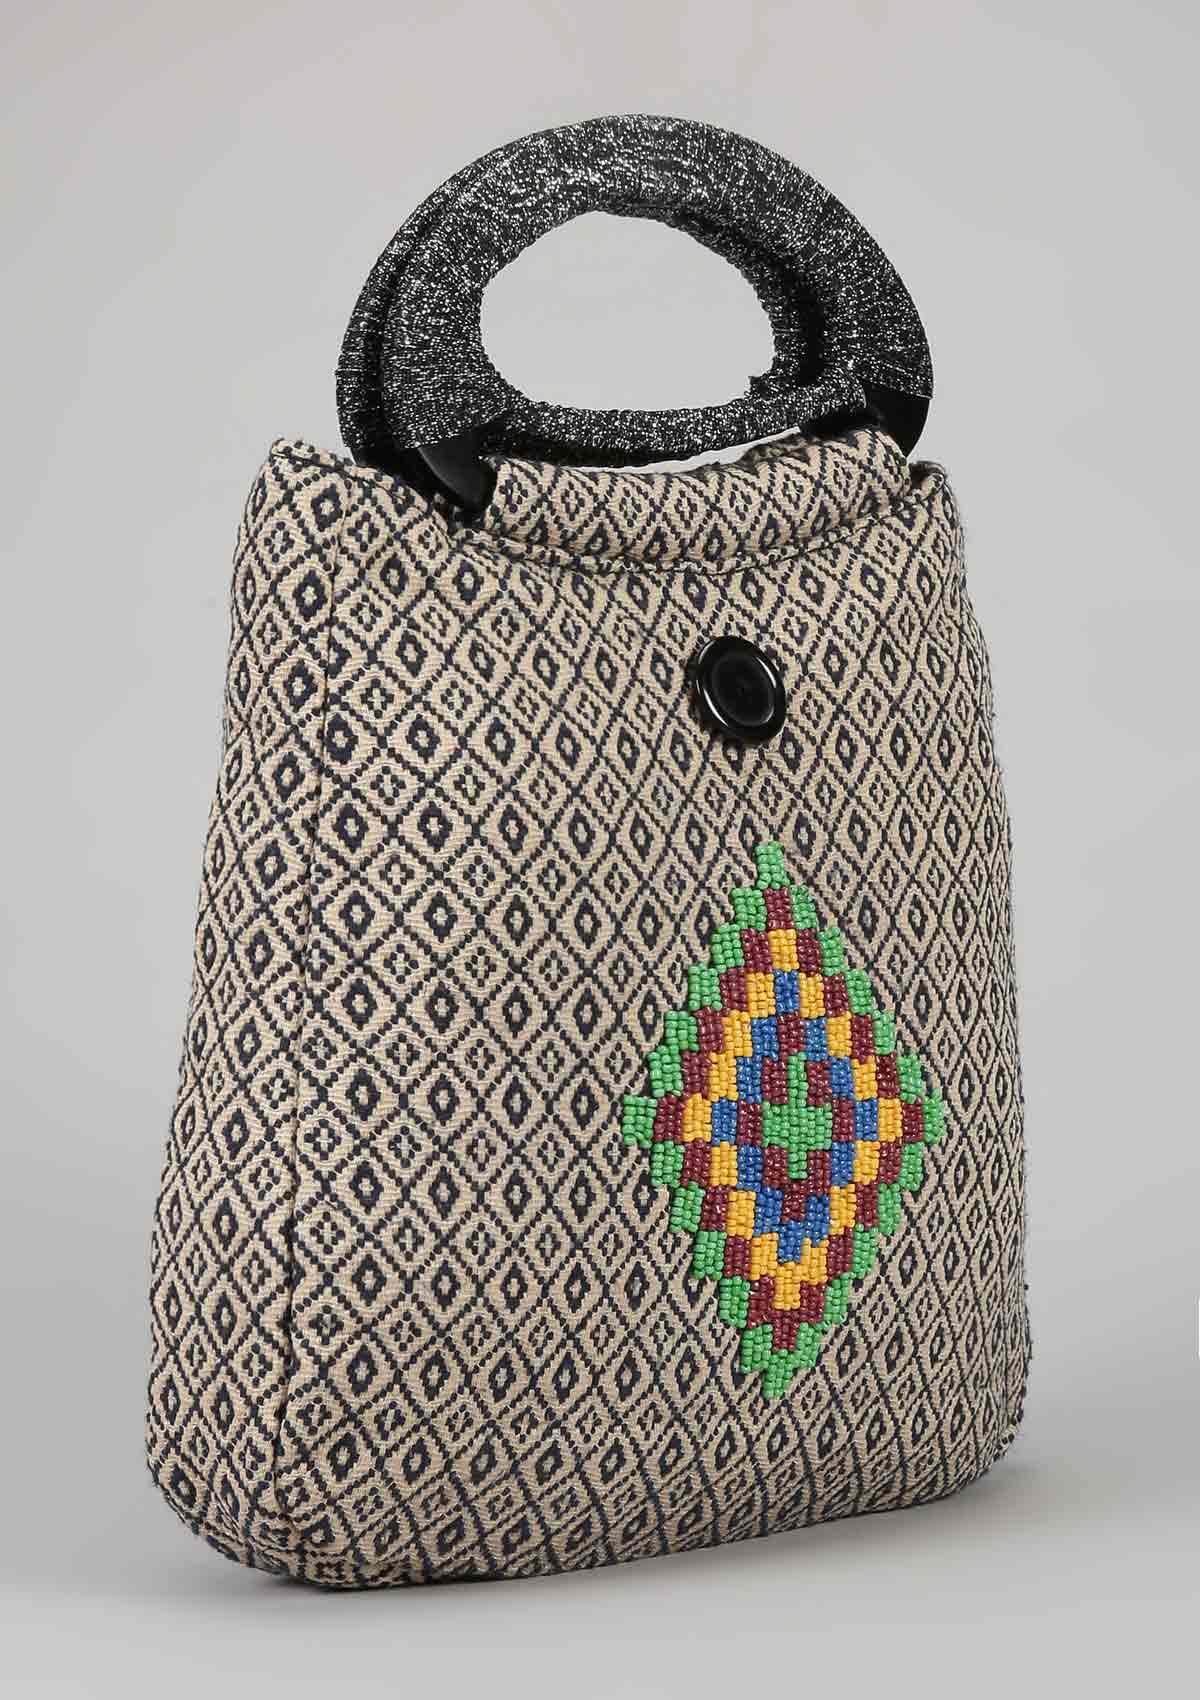 Jacquard bag with bead work - IshqMe